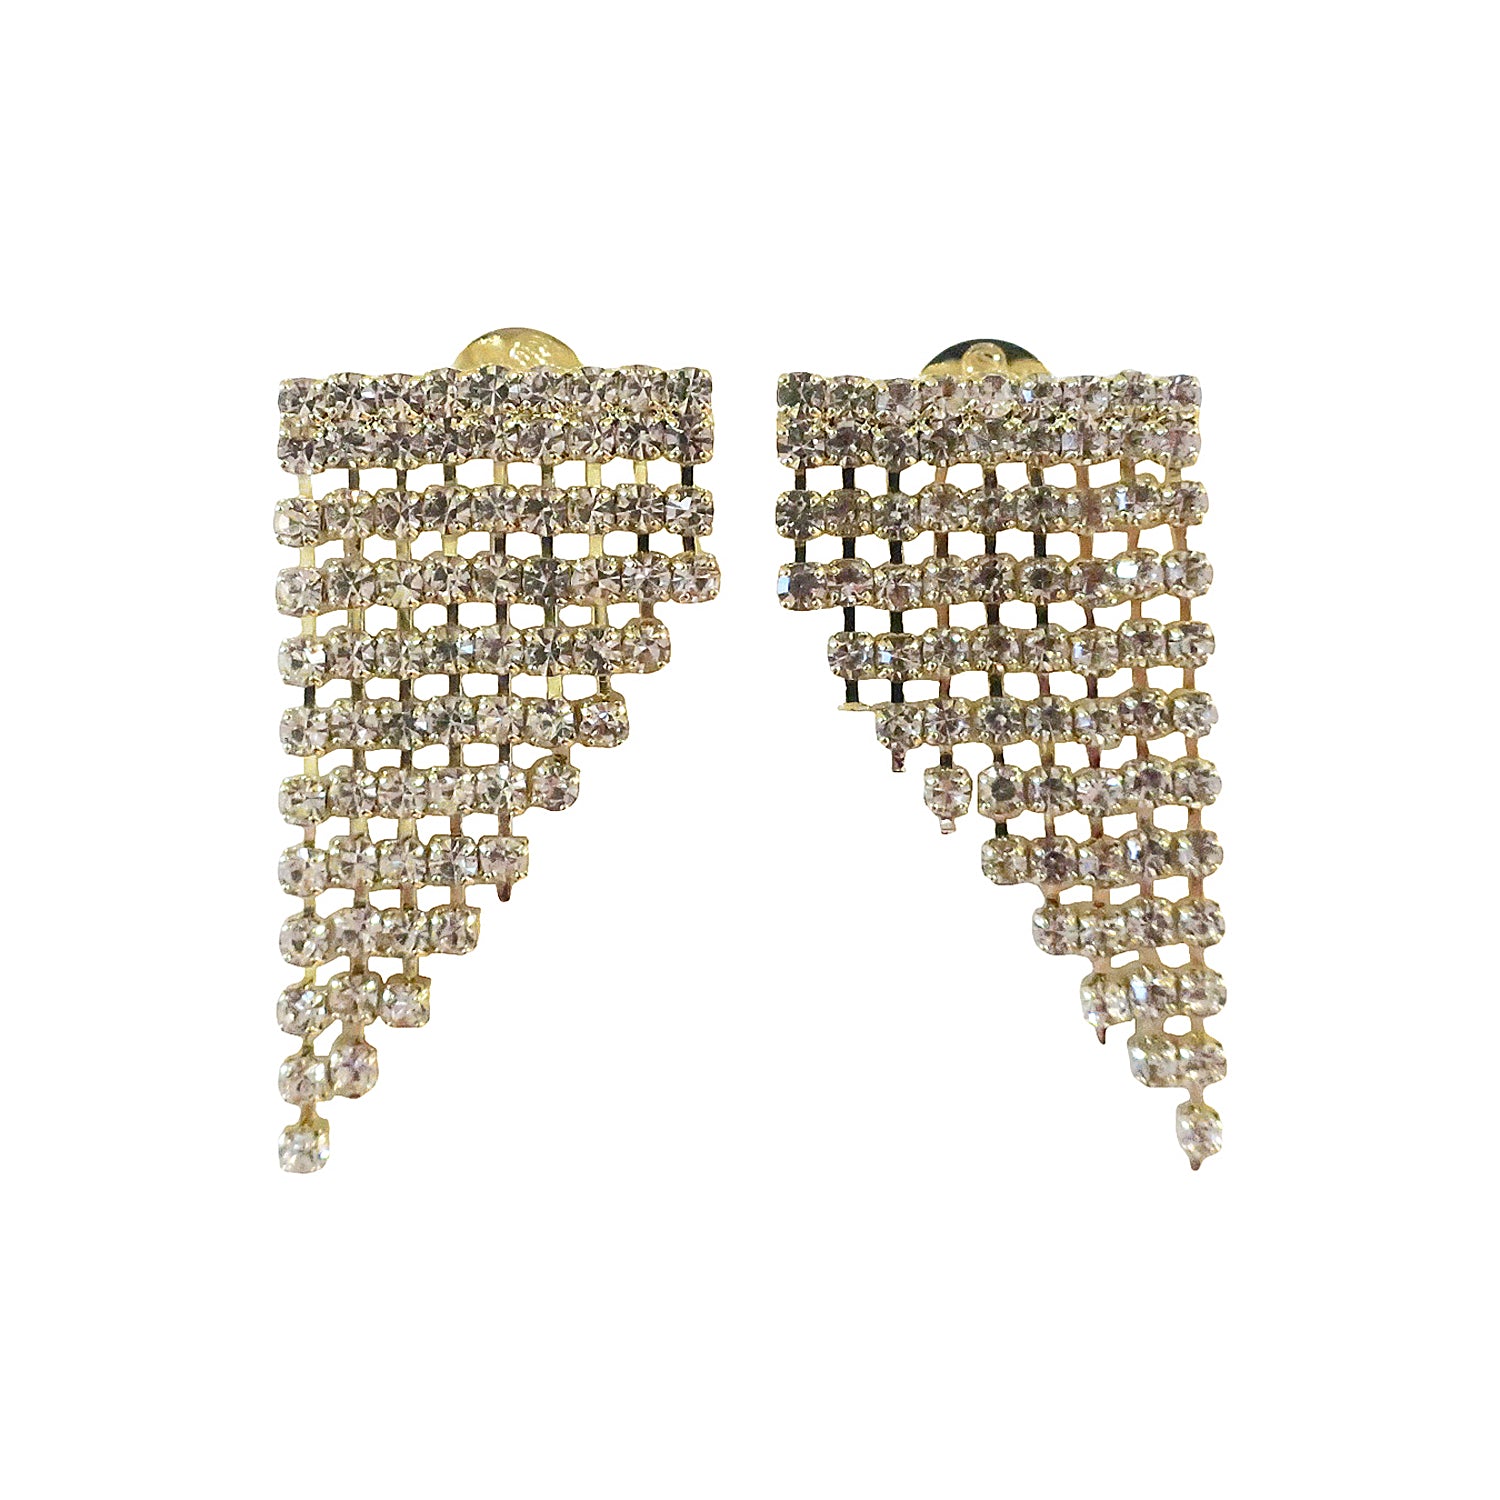 Sheila Fajl Josephine Chandelier Dangle Earrings in CZ and Gold Plated